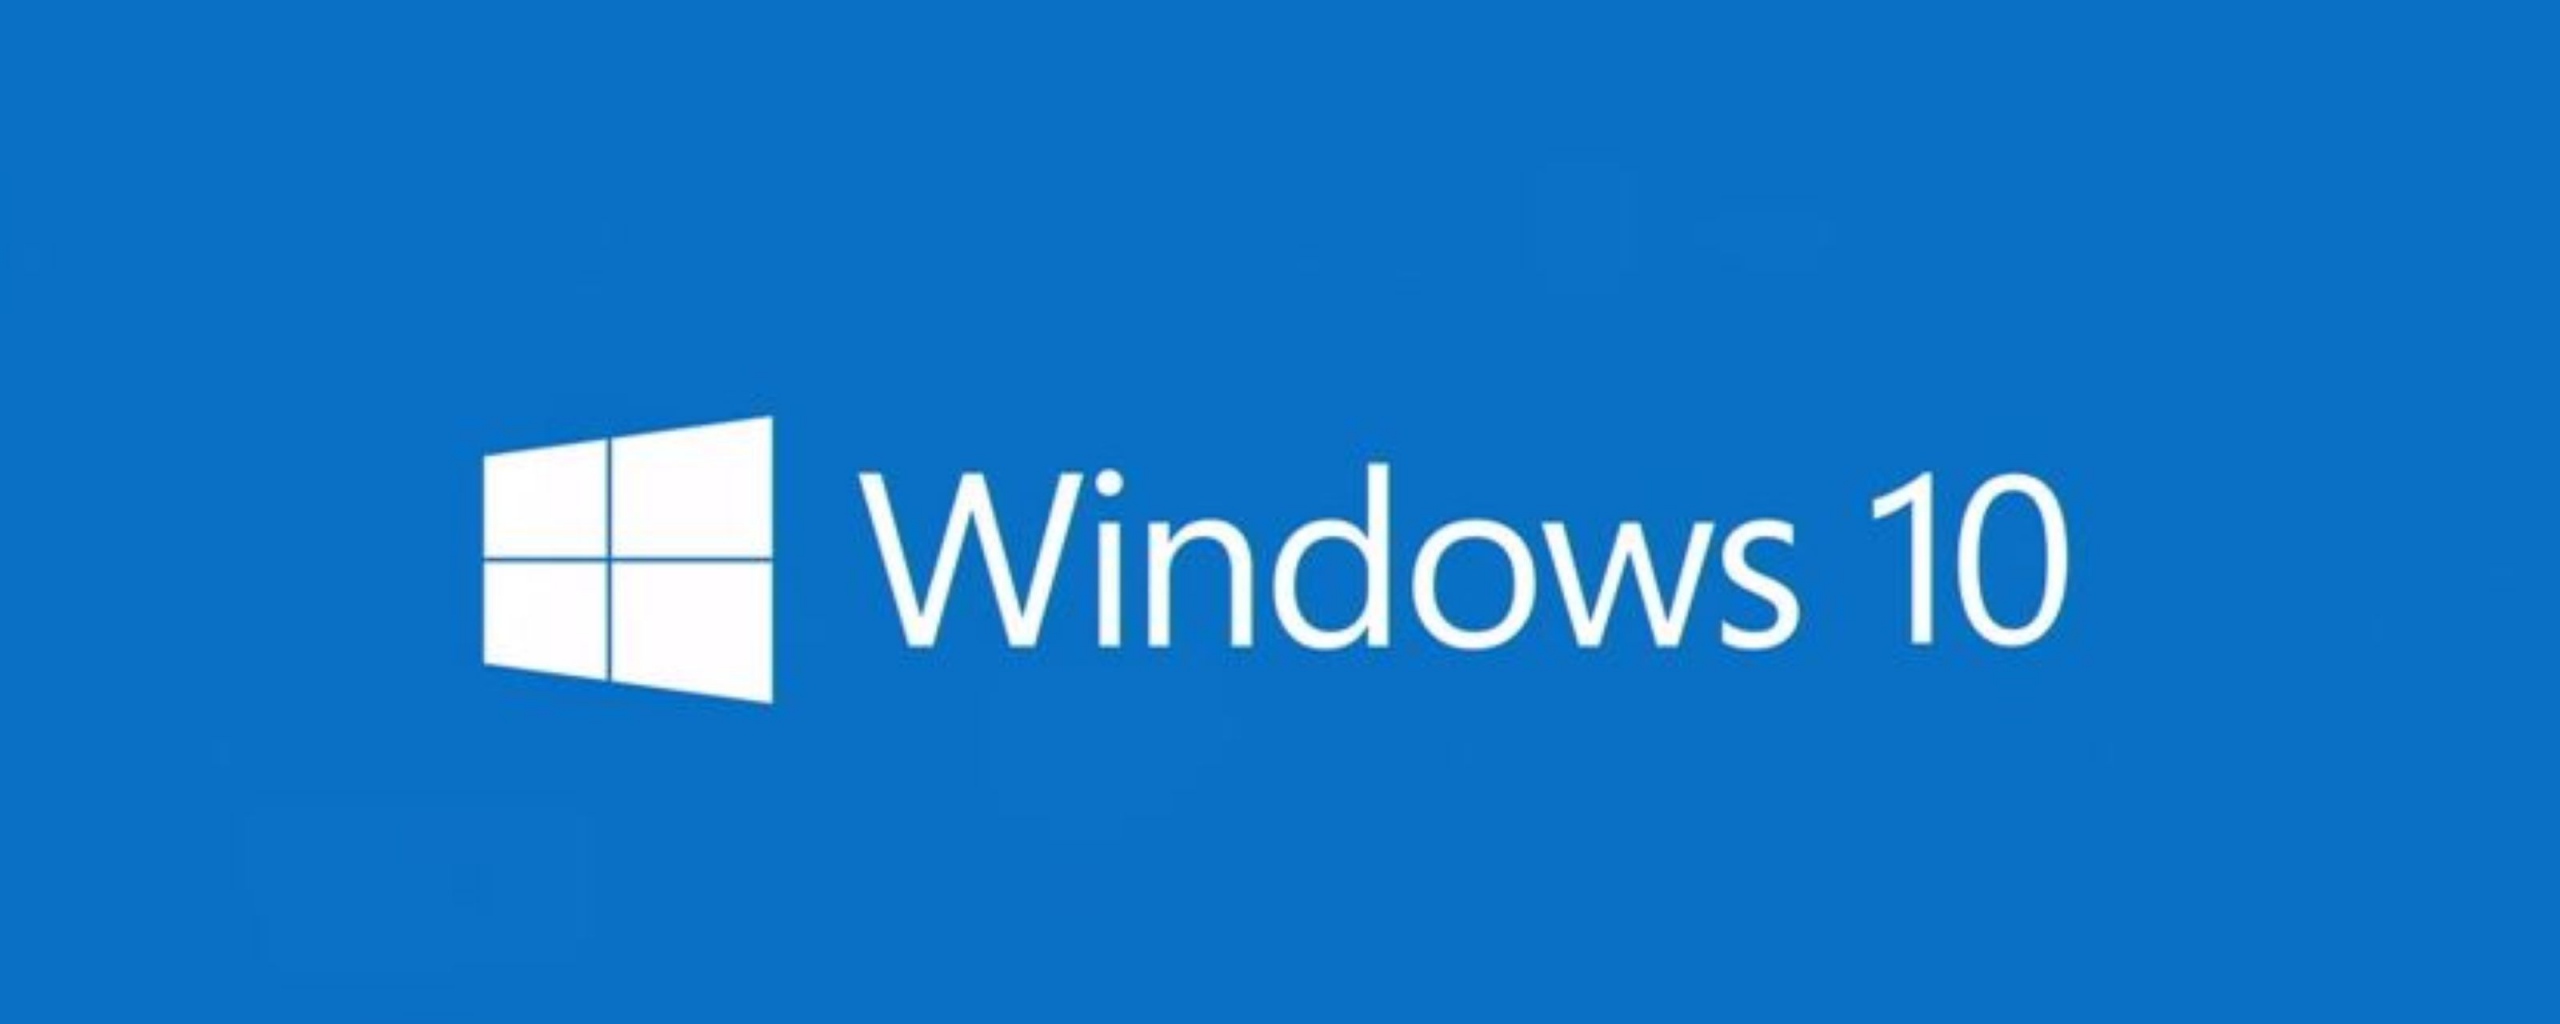 2560x1024 Wallpaper windows 10 technical preview windows 10 logo